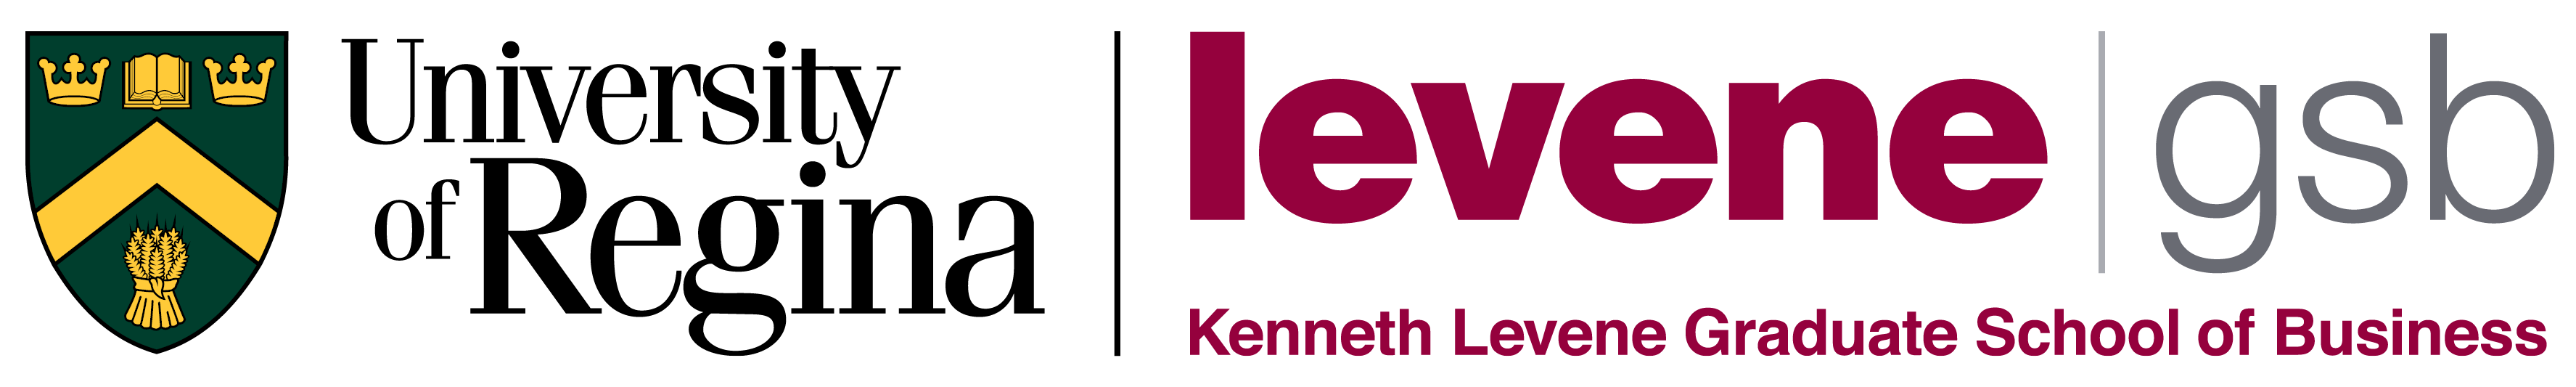 University of Regina, Kenneth Levene Graduate School of Business